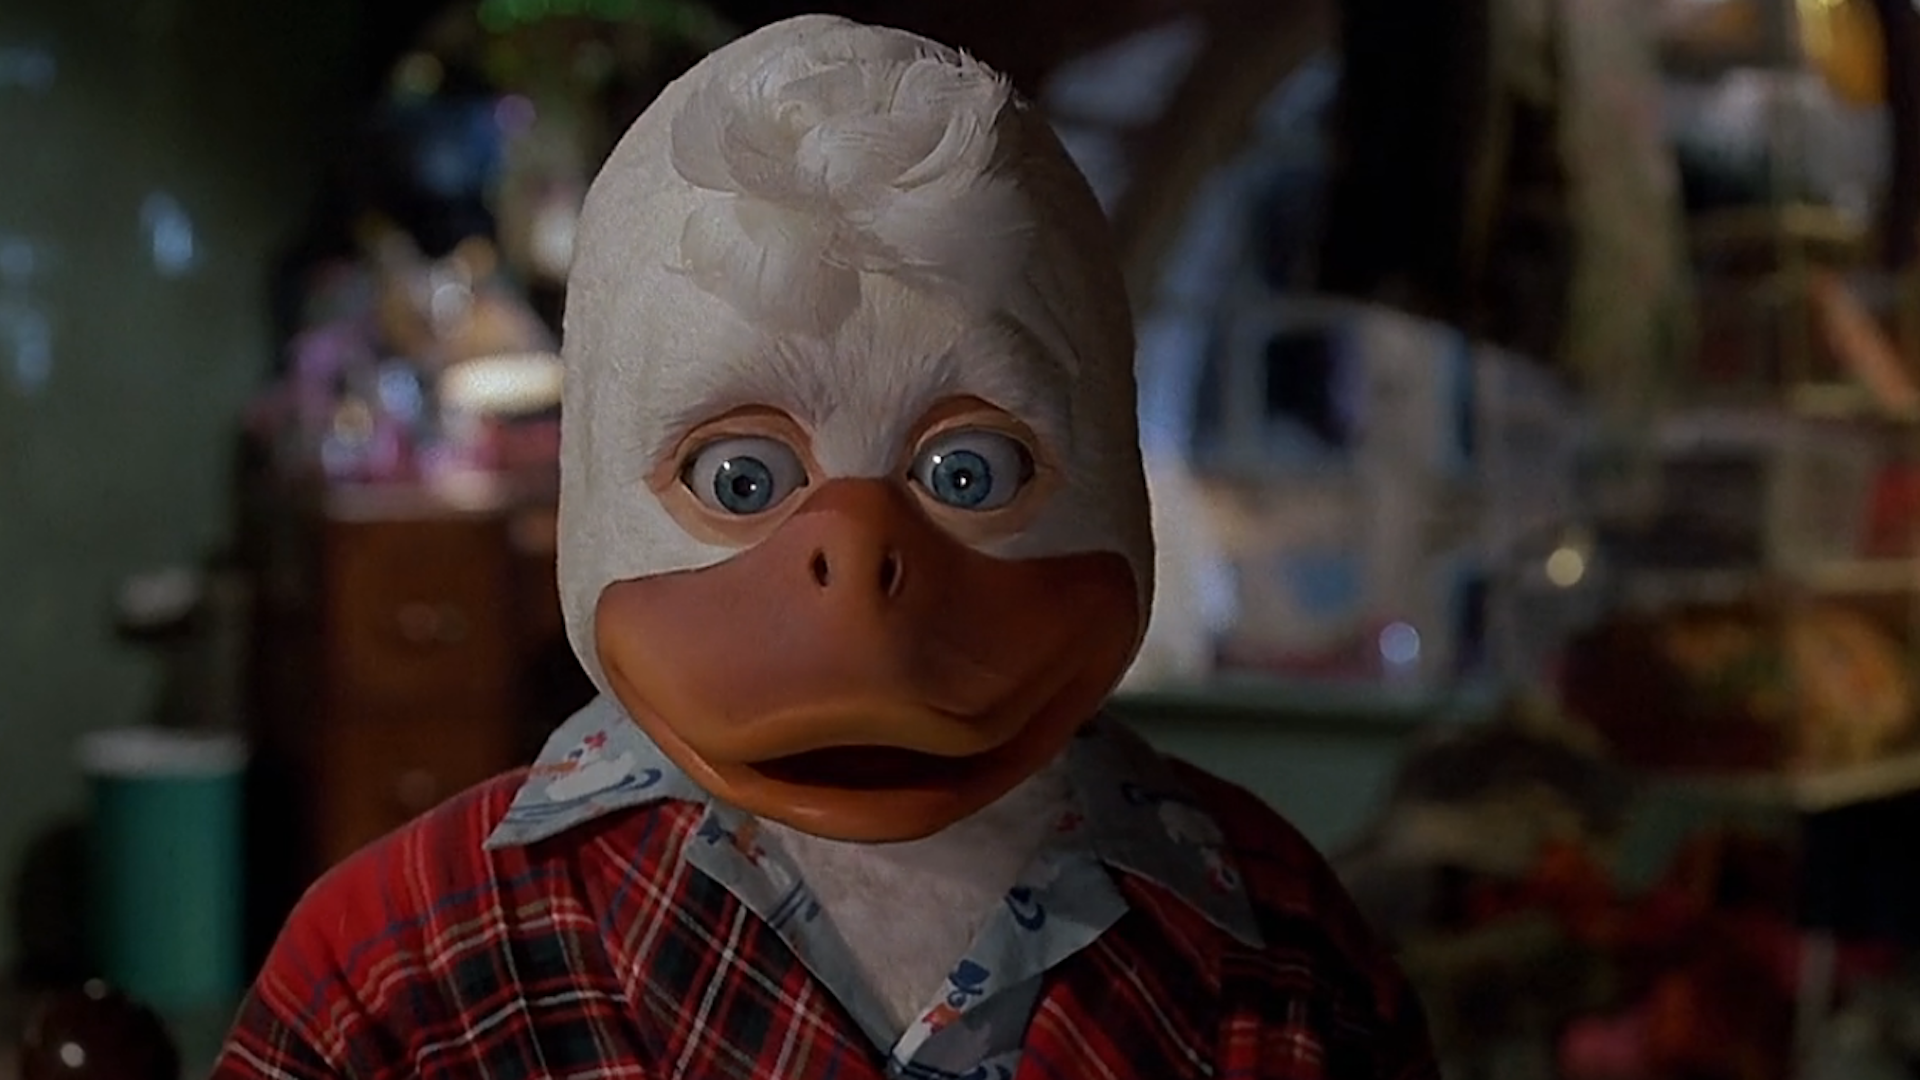 Howard the Duck